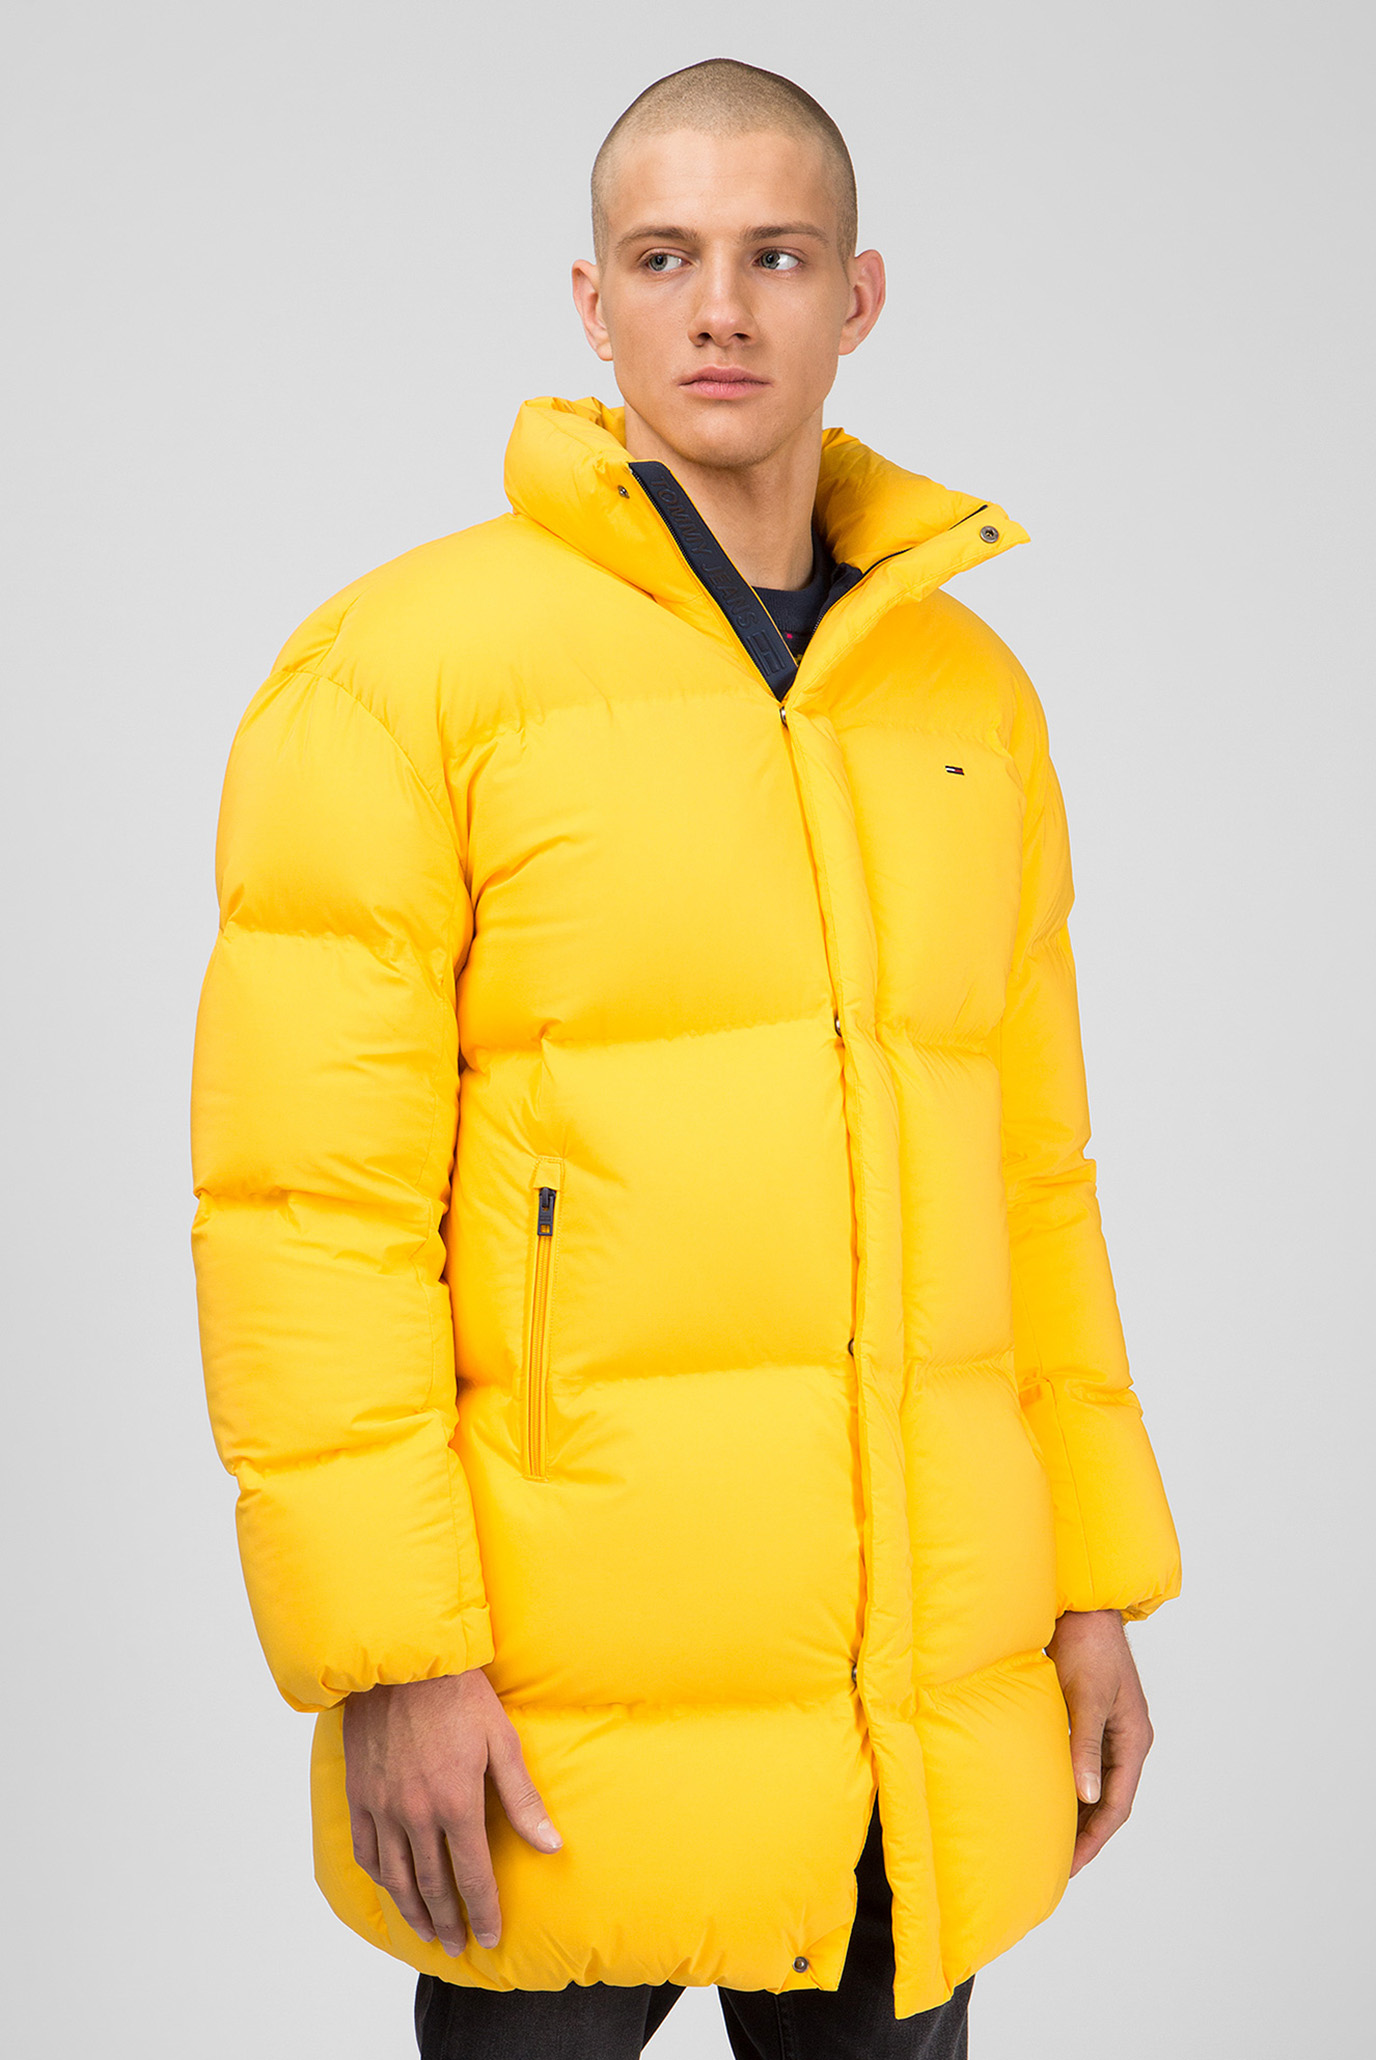 фото мужских курток желтого цвета